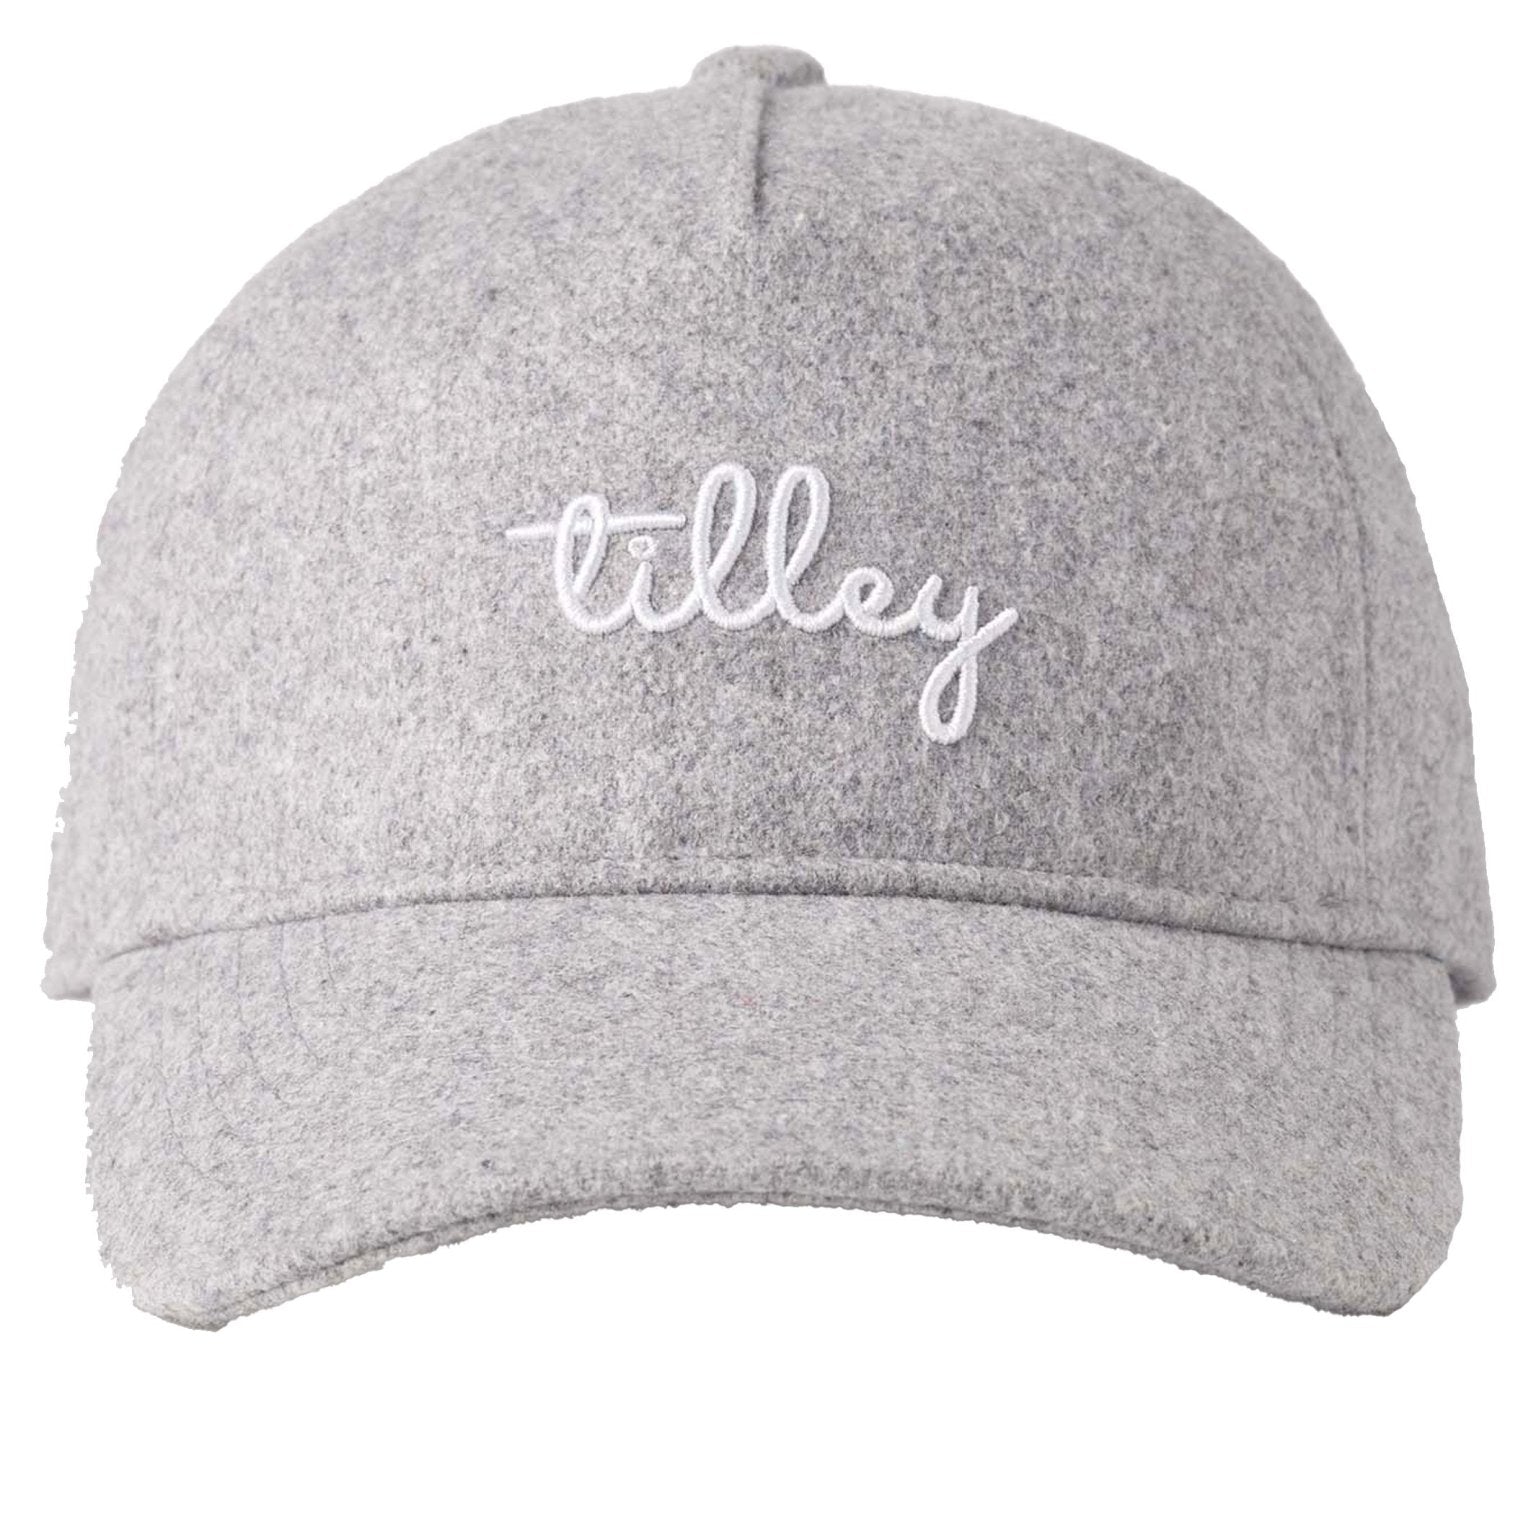 4elementsclothingTilleyTilley - Wool Baseball Cap / Hat - Chain stitched ball cap / hatHatsH03HT4027/GREY/SM